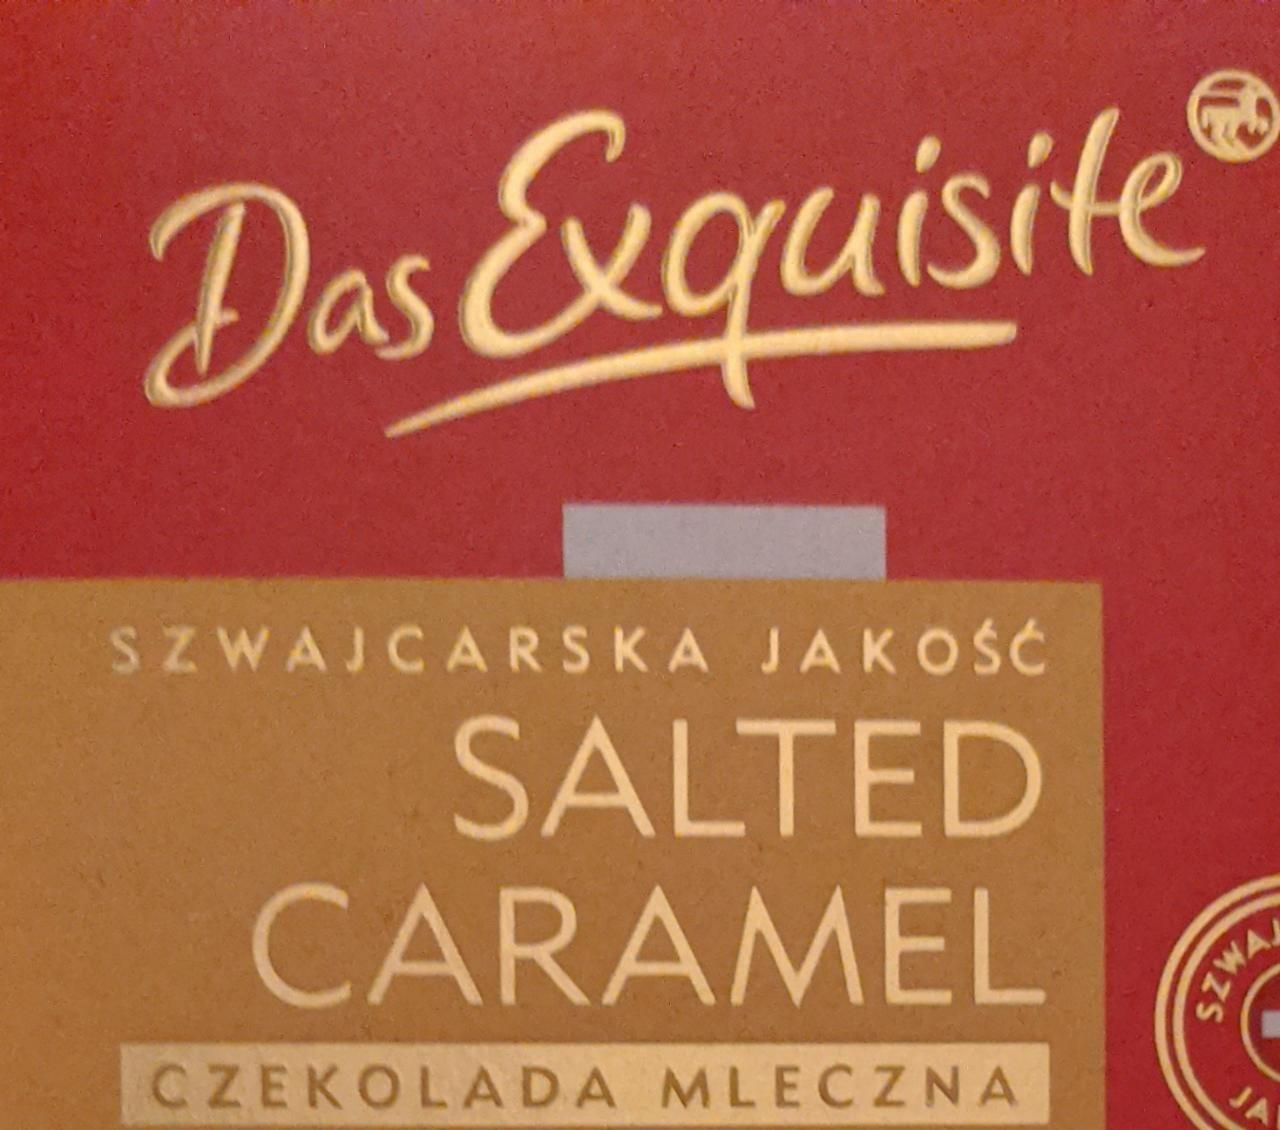 Фото - Salted Caramel czekolada mleczna Das Exquisite